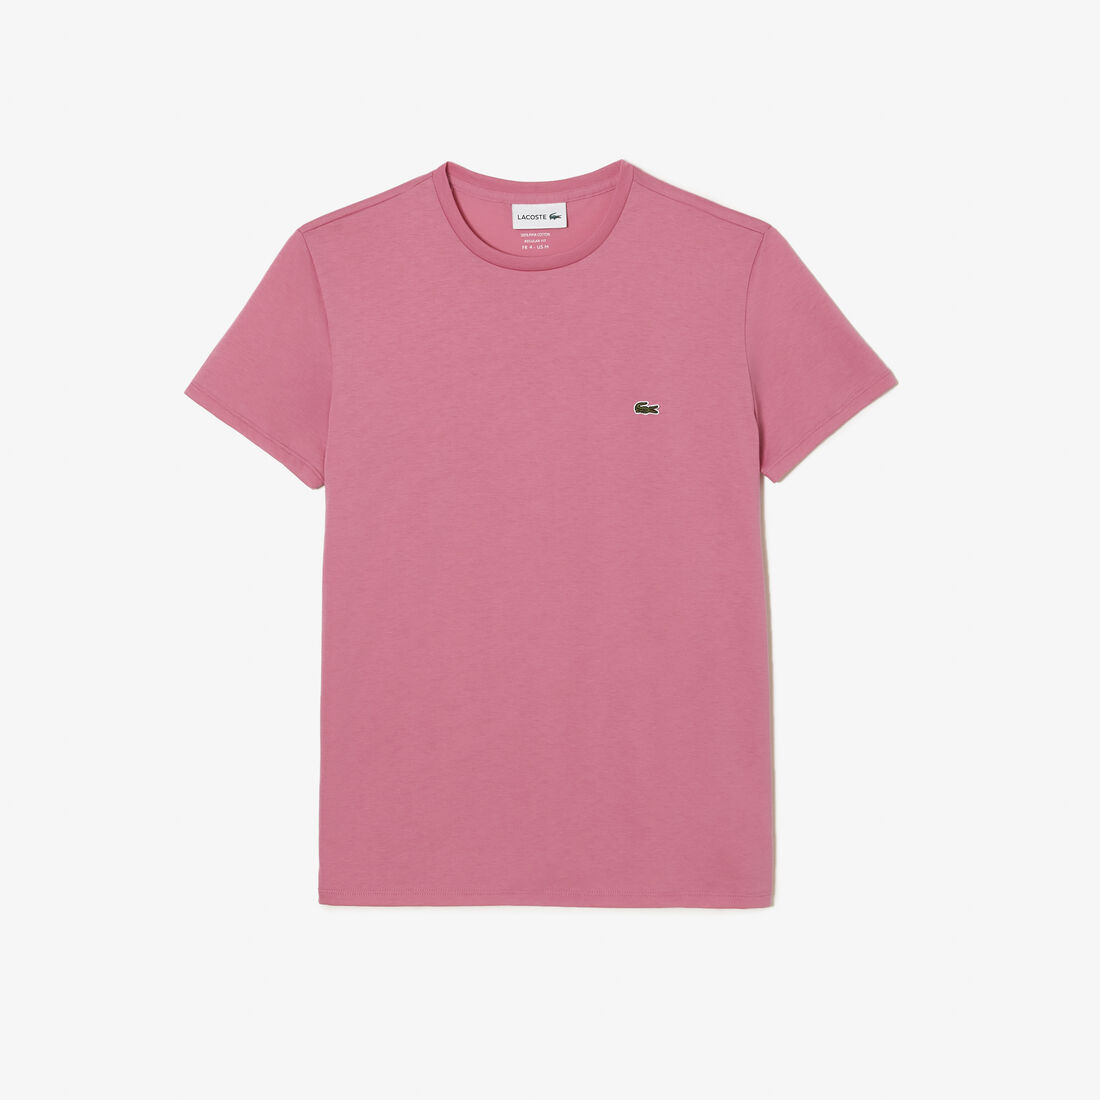 Lacoste - Pima Cotton Jersey T-Shirt, Crew Neck - Pink